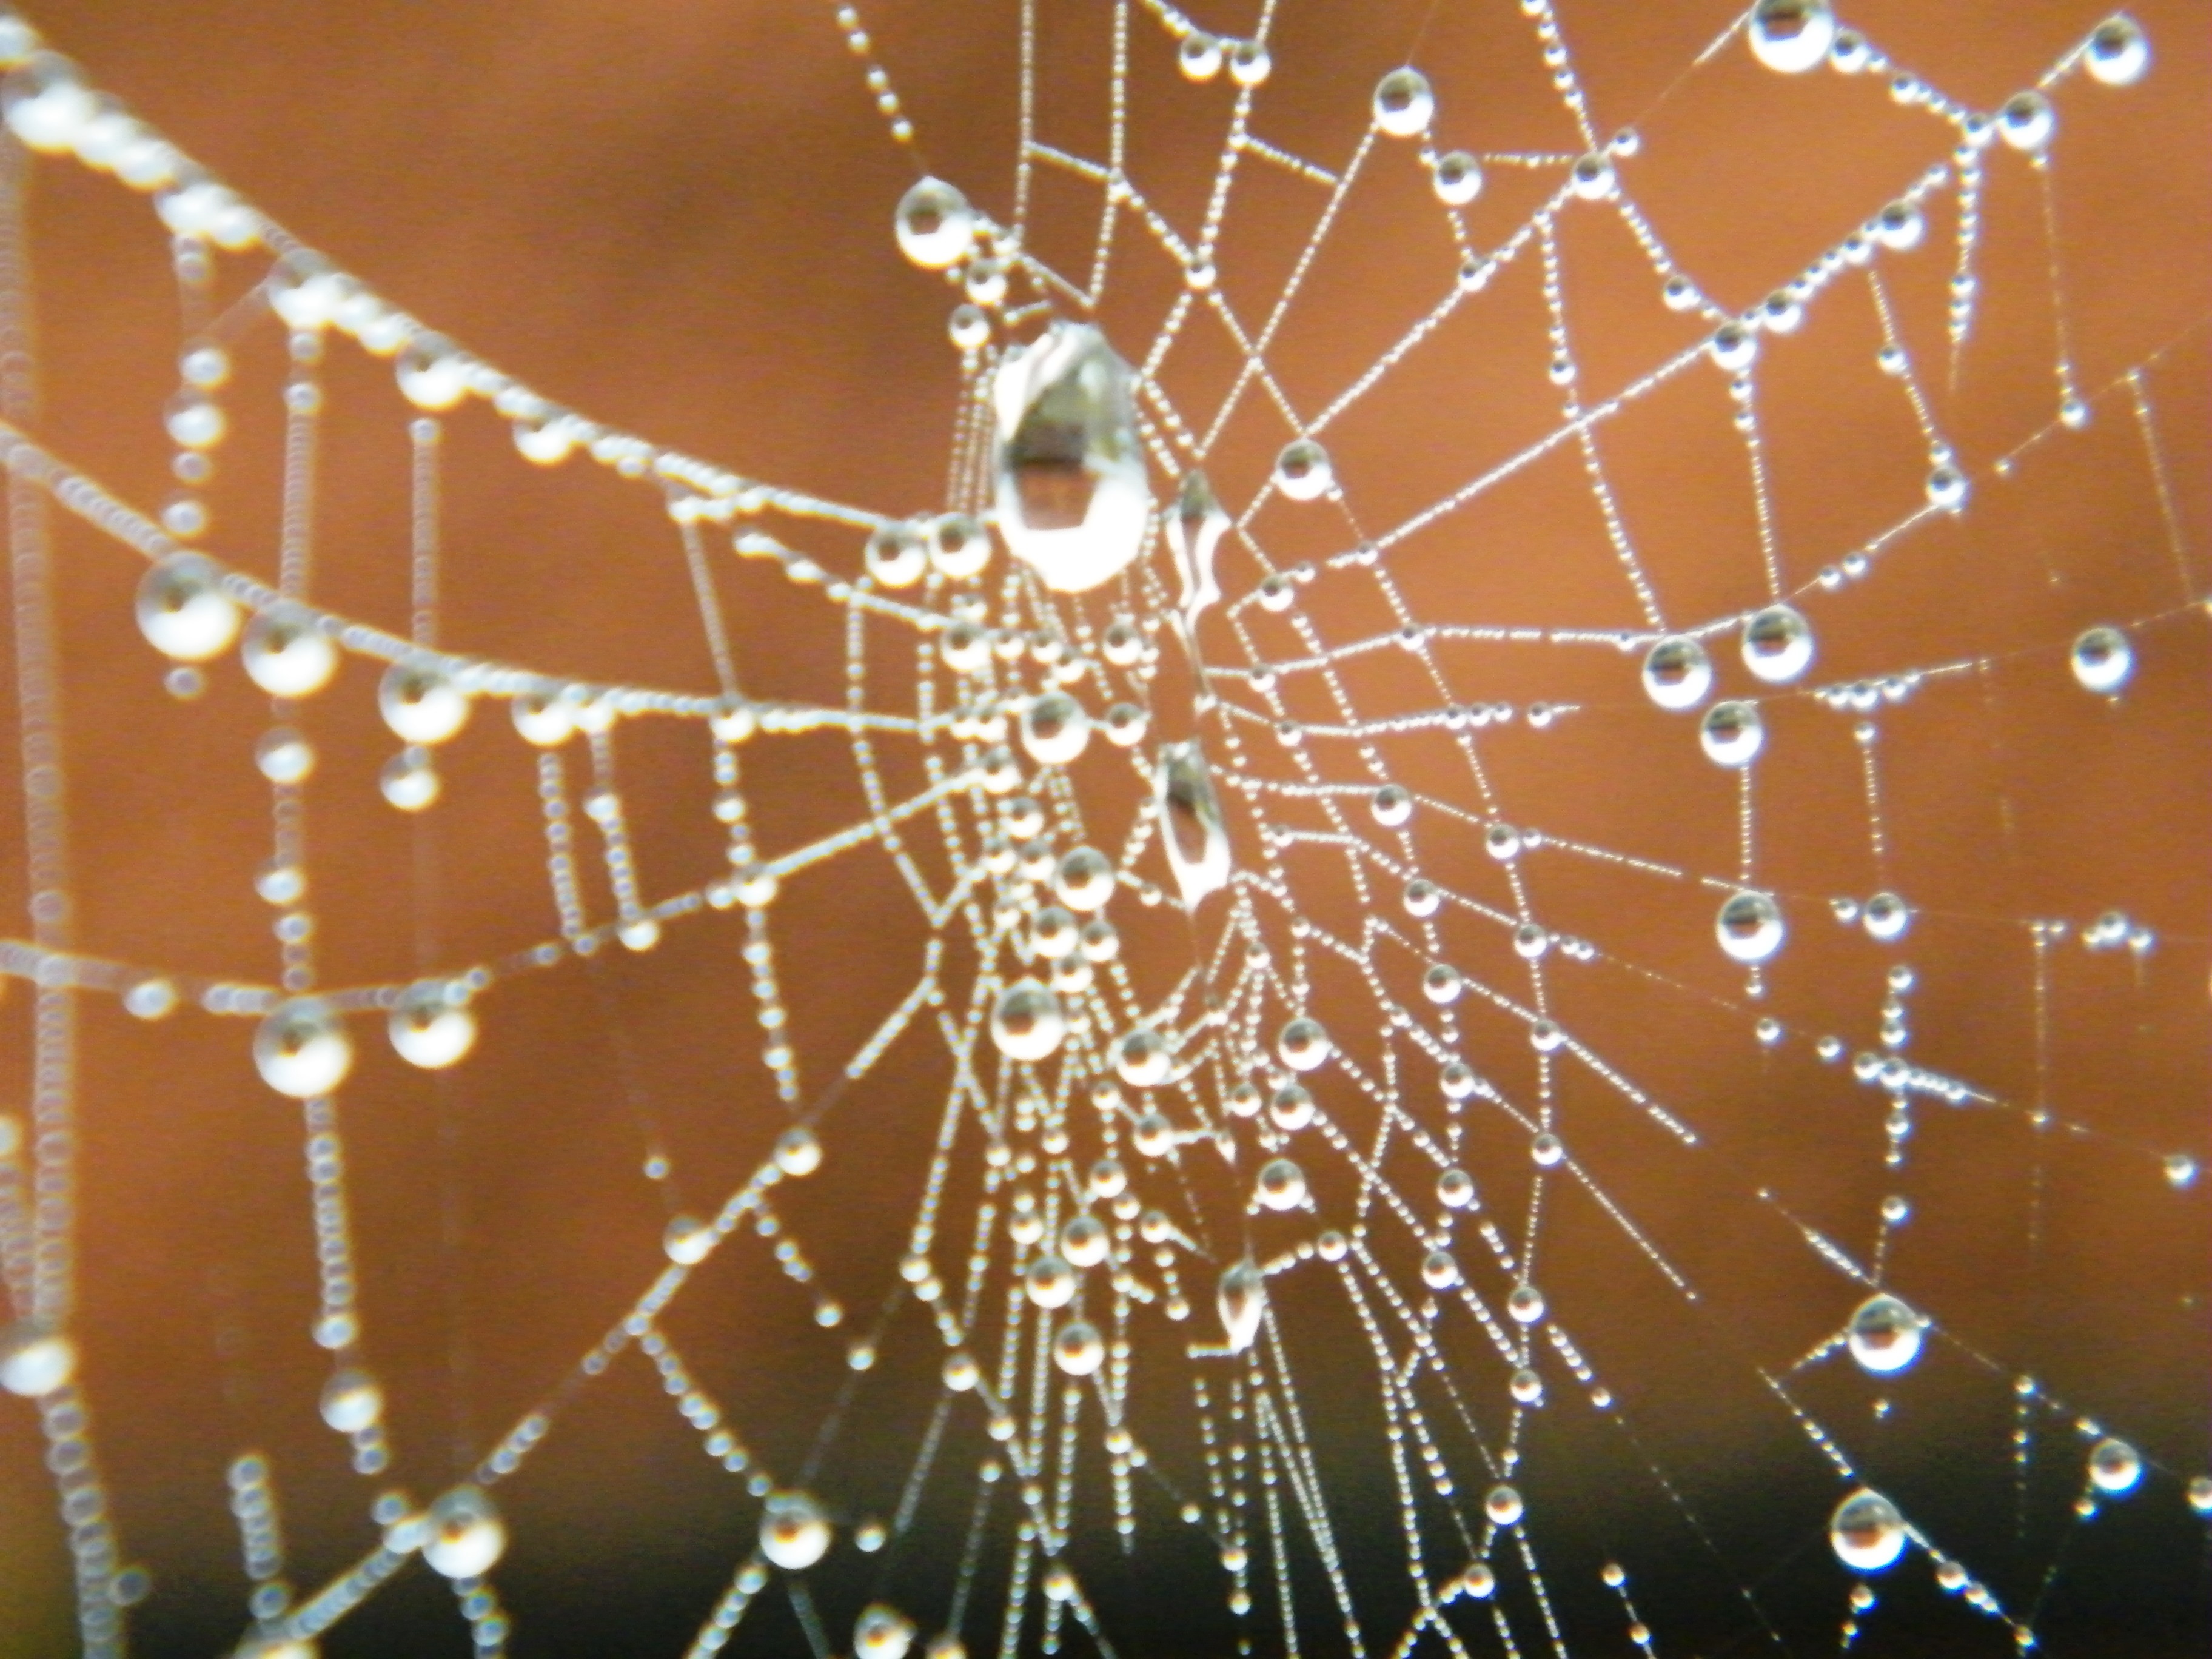 Druppels vangen aandacht, Spinnenweb teksten